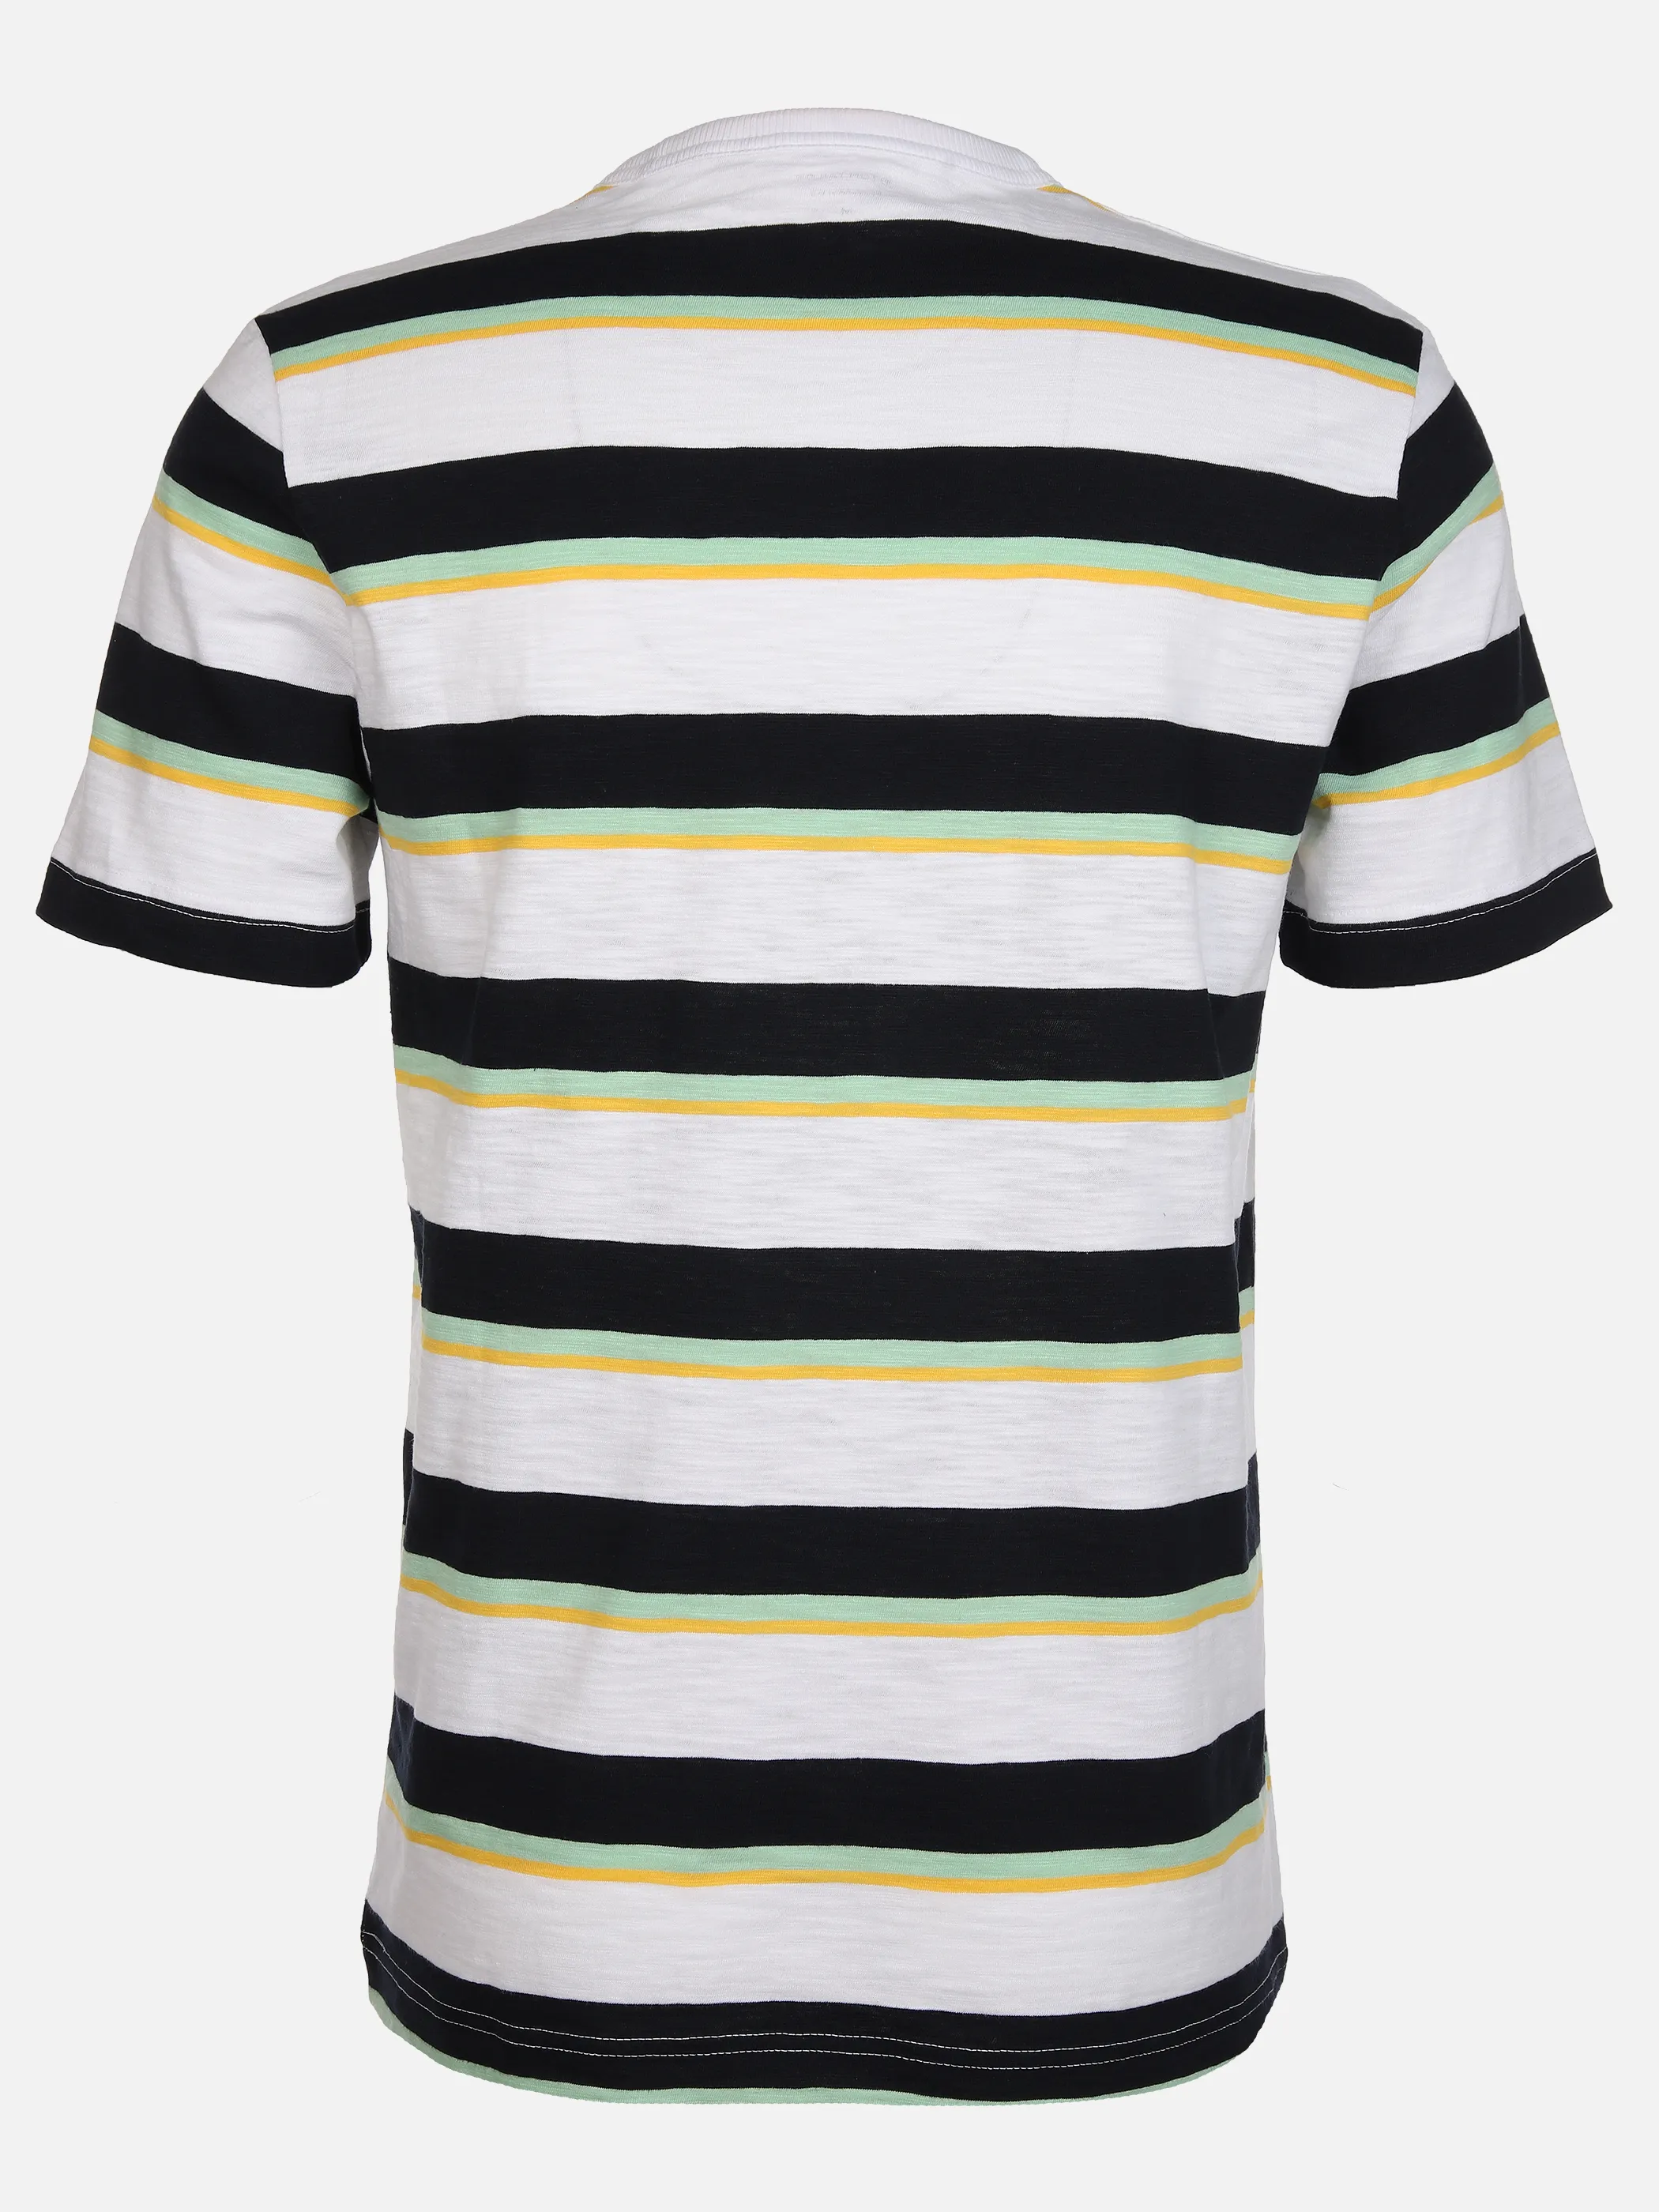 Tom Tailor 1040935 striped t-shirt Weiß 890952 35071 2